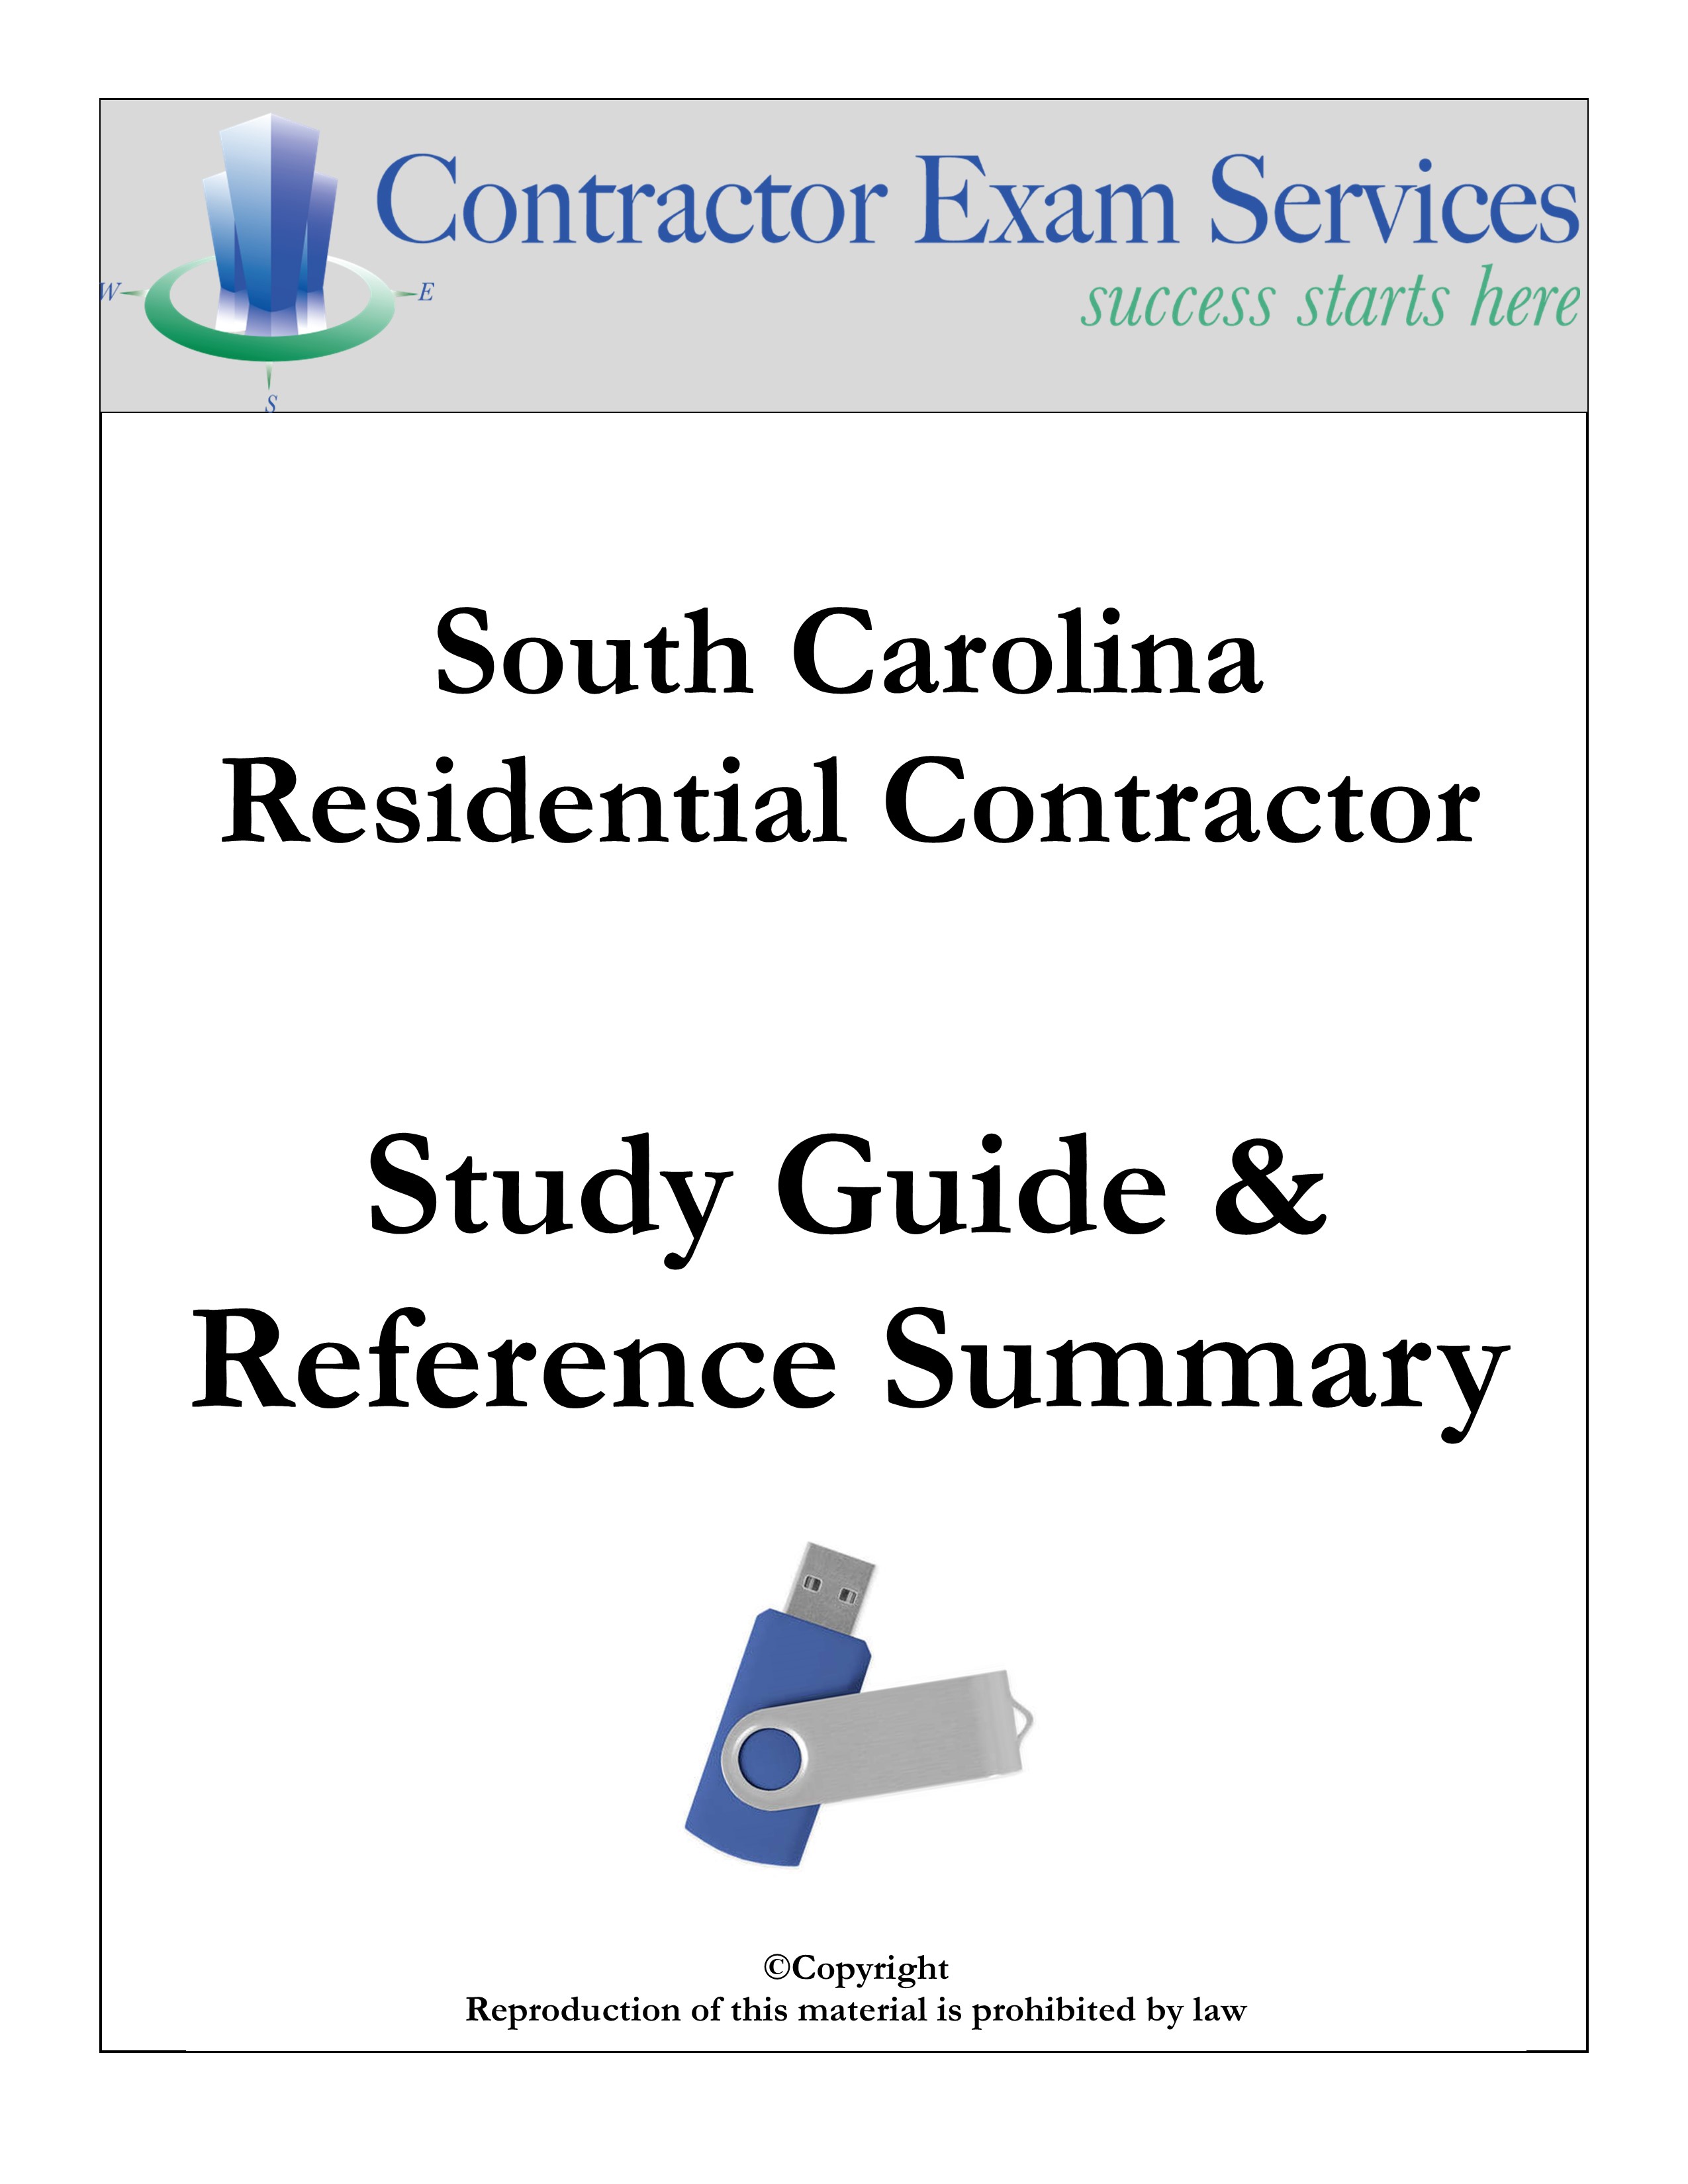 At Home Seminar and Study Guide CD Course - South Carolina